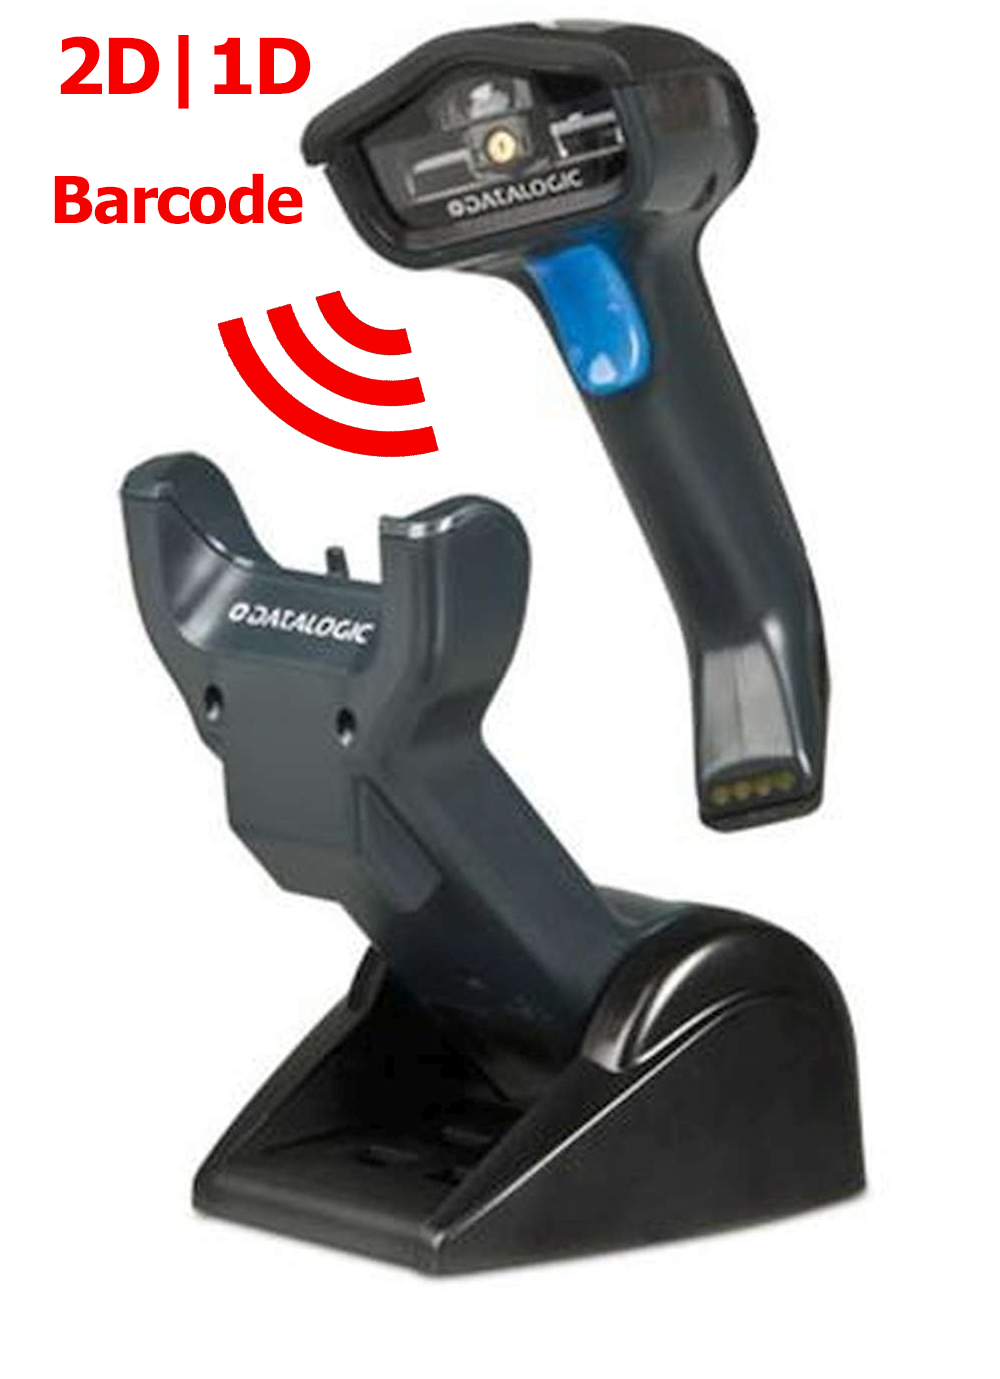 Datalogic GM4400 2D Barcodescanner Funkscanner USB Scanner kabellos 